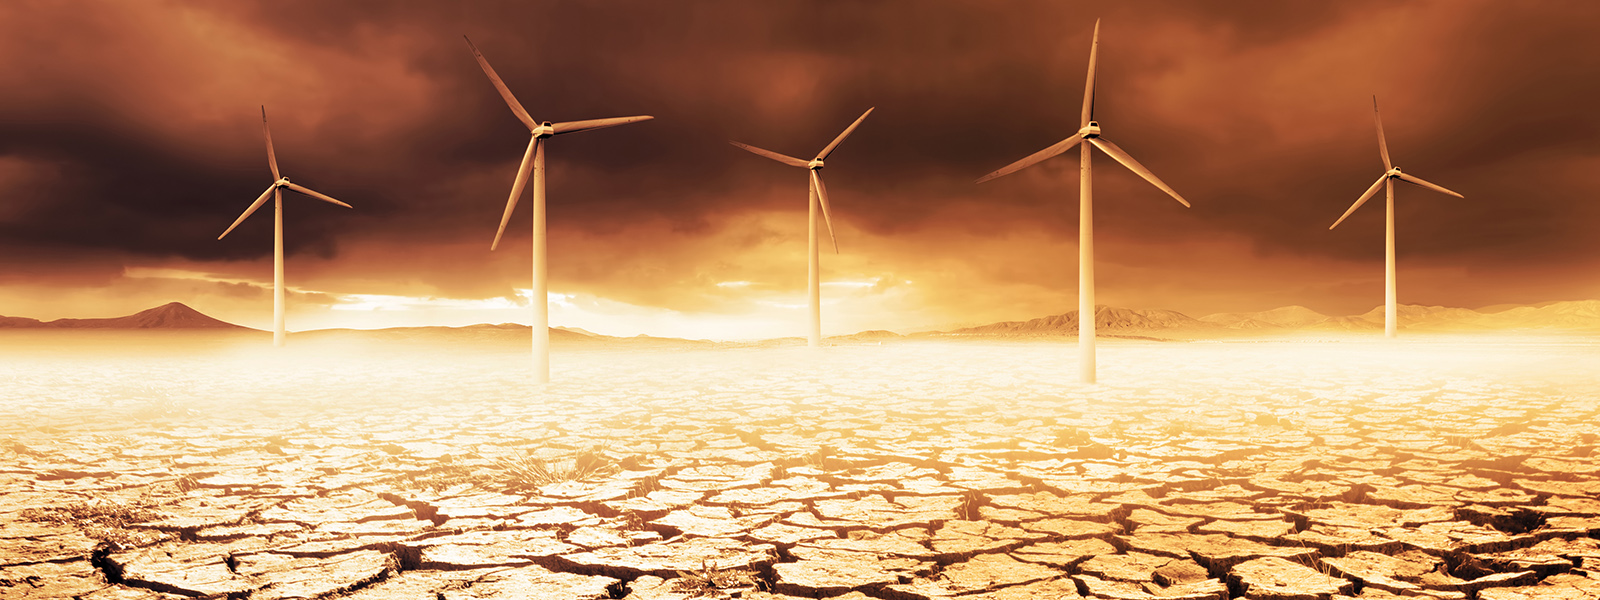 Wind turbines on a cracked earth desert.